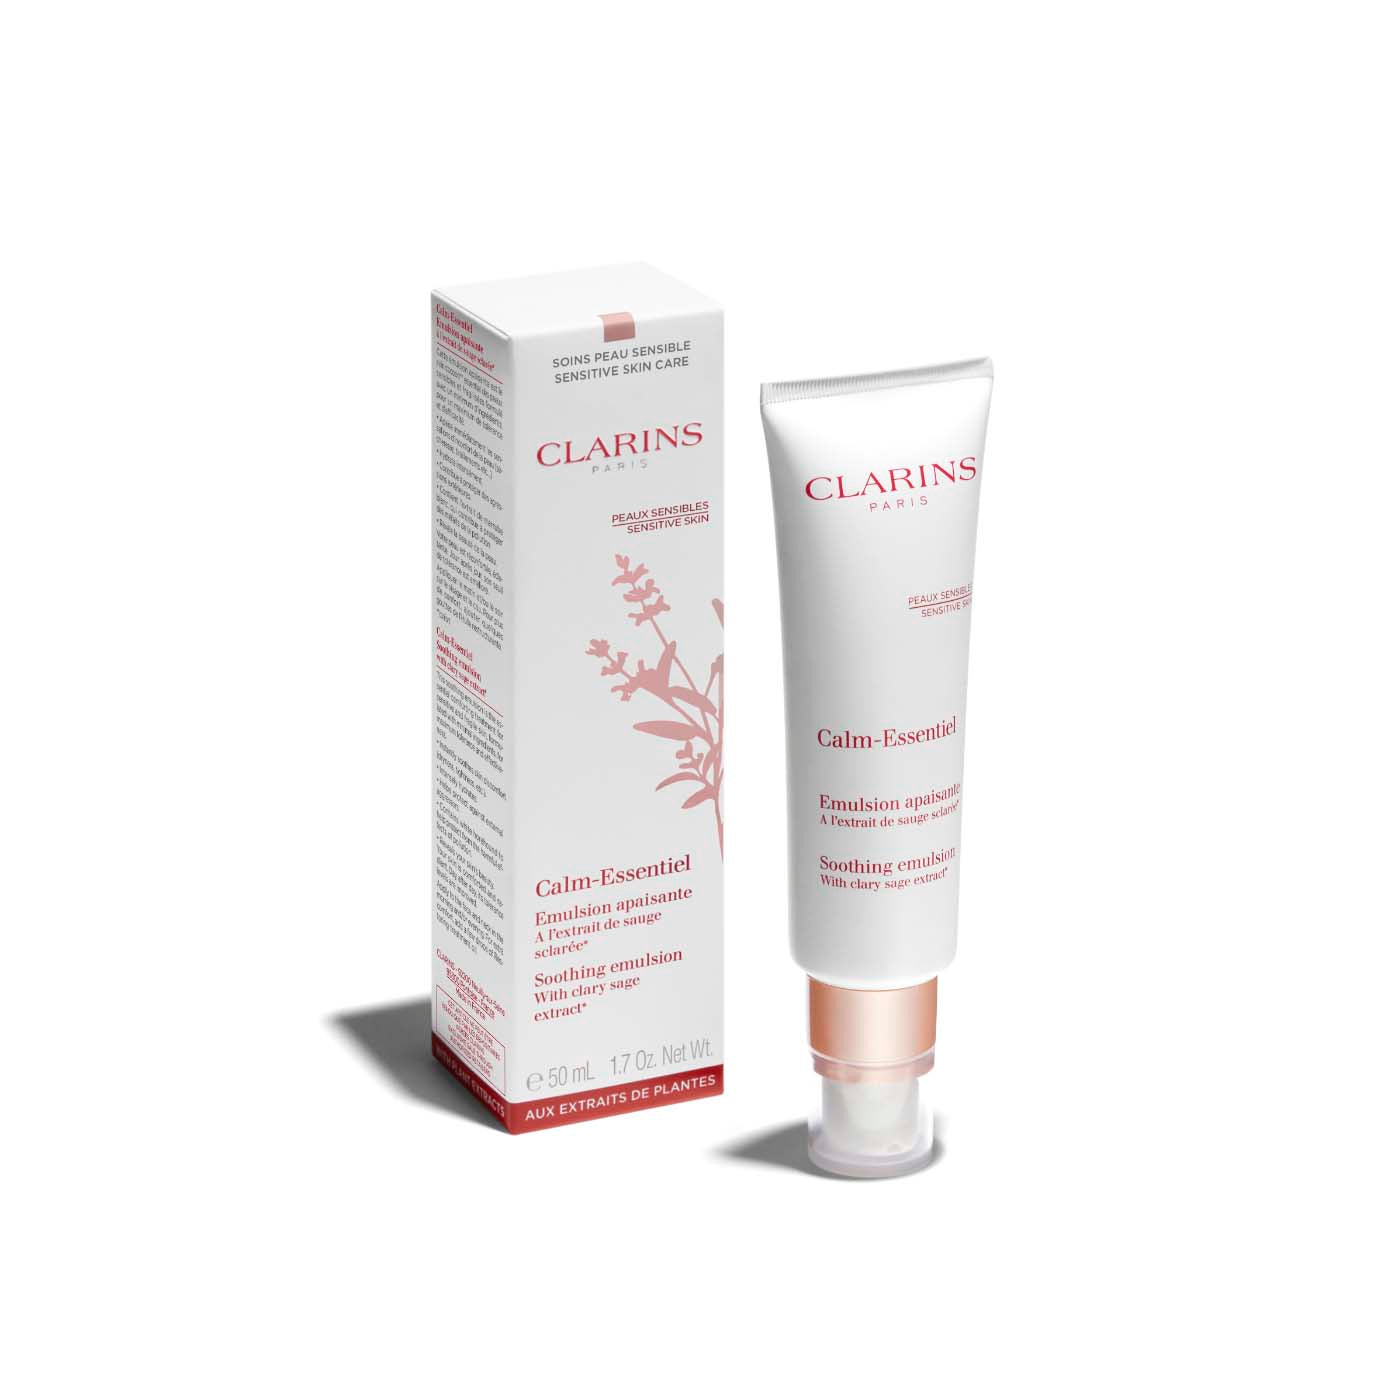 CLARINS Calm-Essentiel Soothing Emulsion 50mL